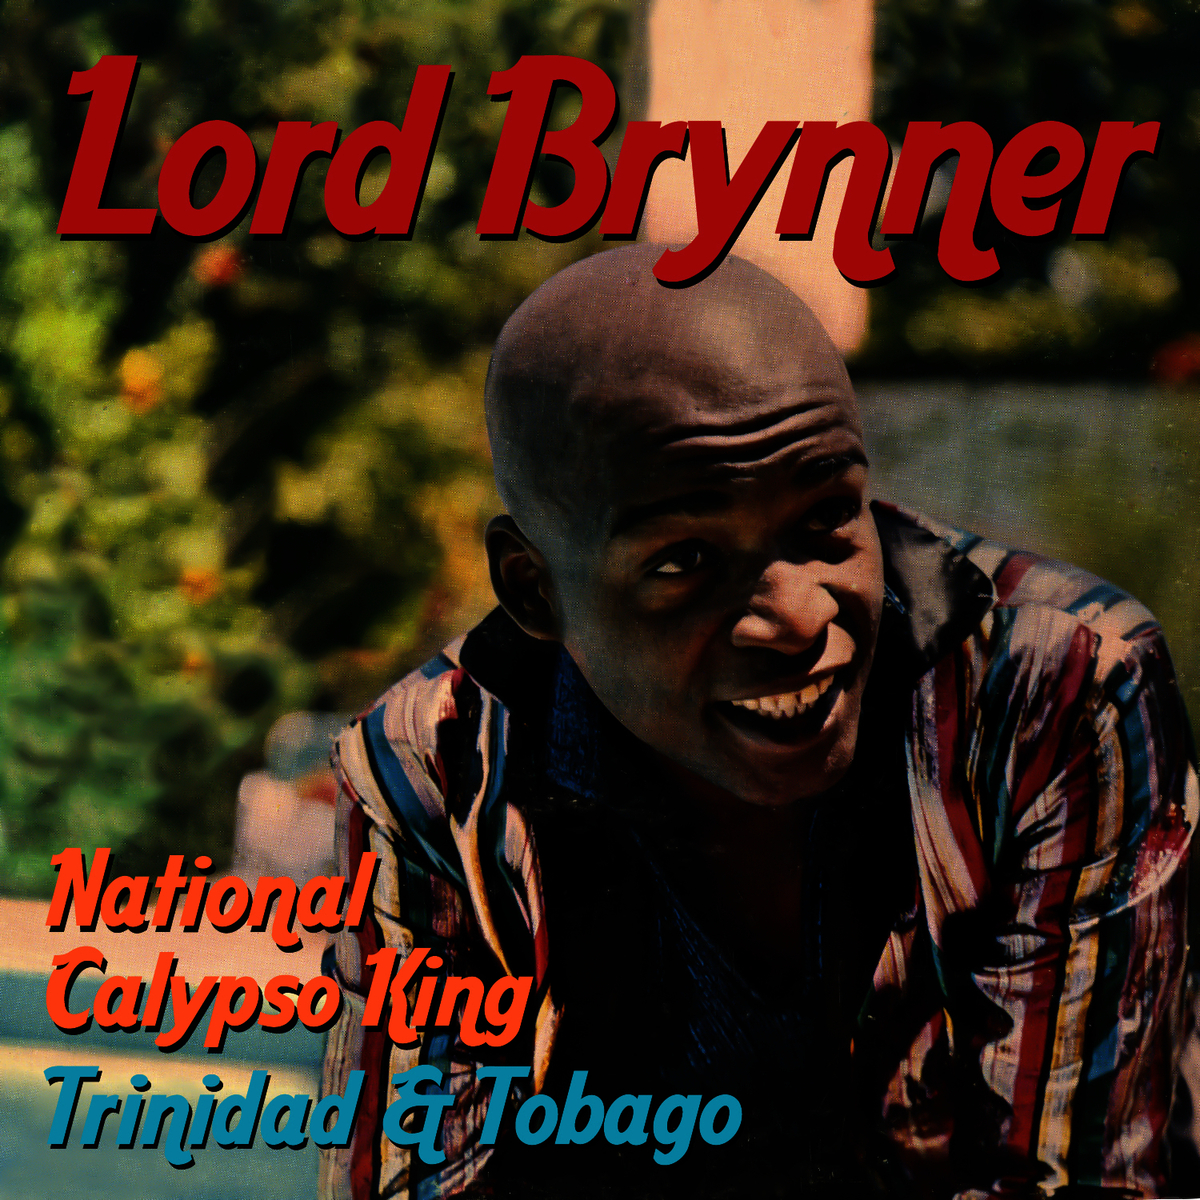 Lord Brynner - National Calypso King Trinidad and Tobago